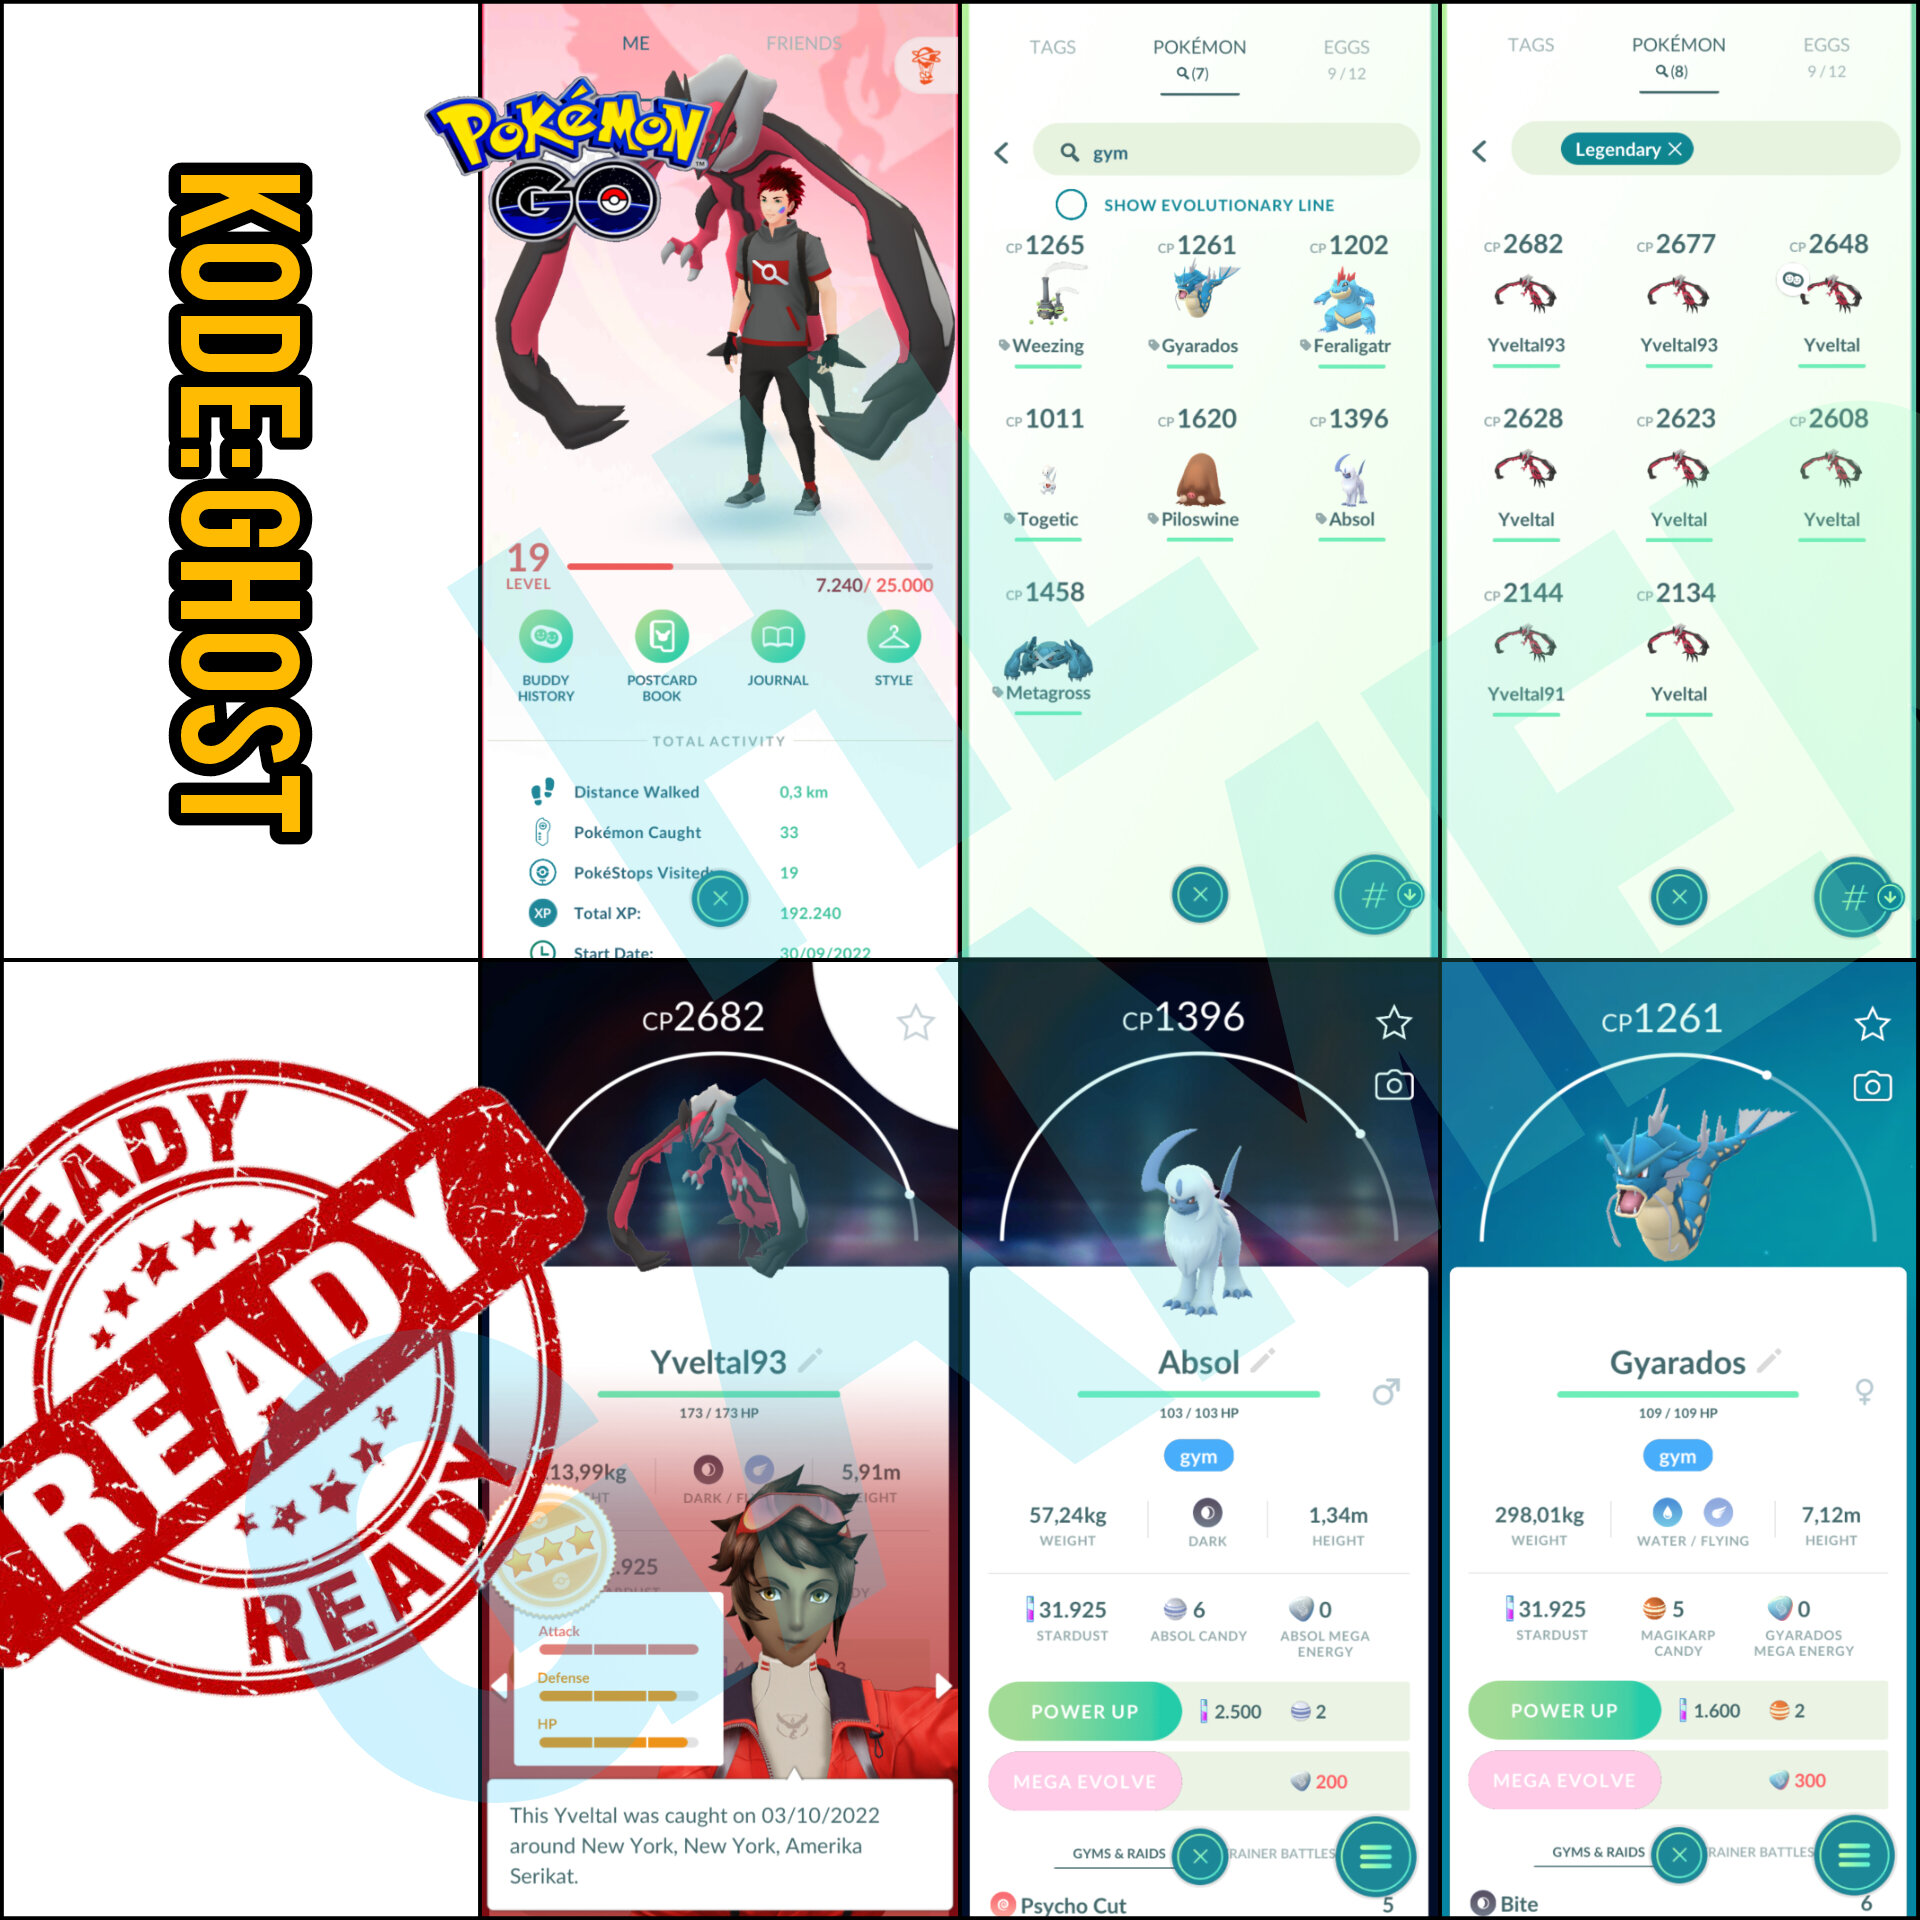 Shiny Giratina Origin Pokémon GO – Trade 1.000.000 stardust - Read